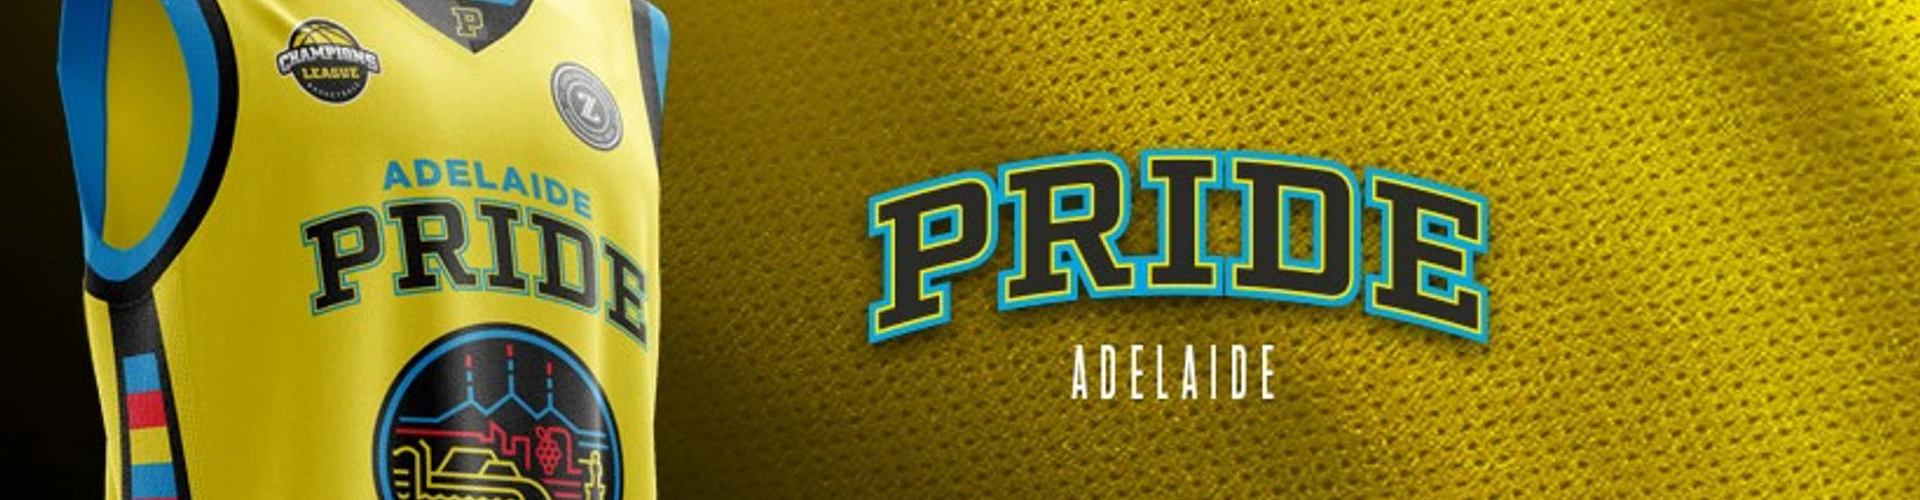 Adelaide Pride 3x3